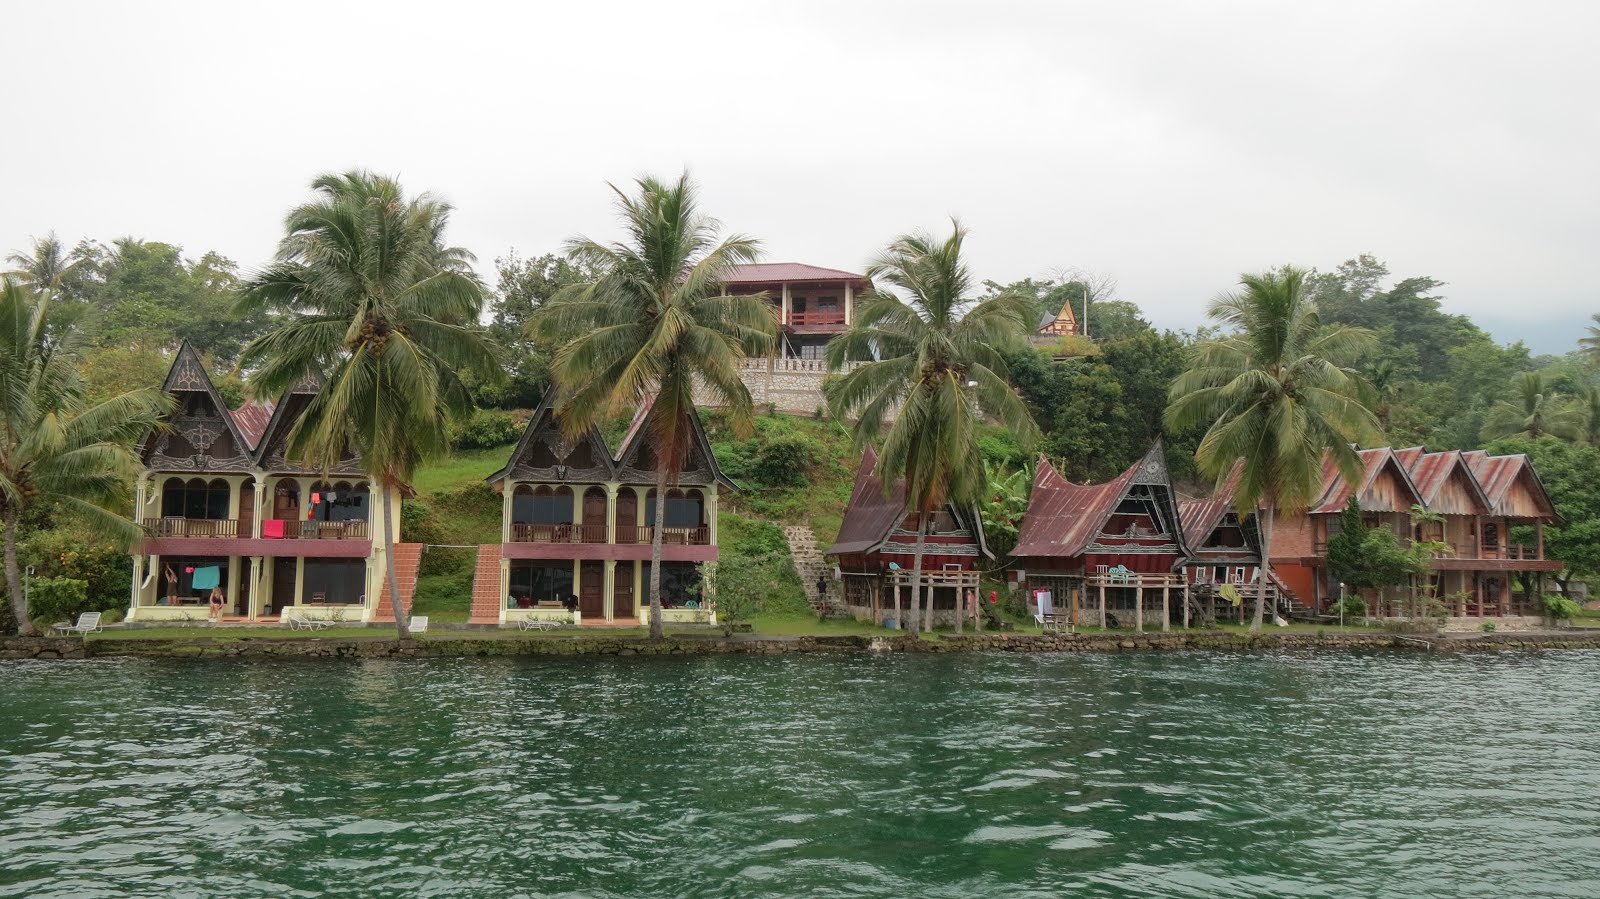 Taiwan Camping 台灣露營 Lake Toba Samosir Island Sumatra Indonesia